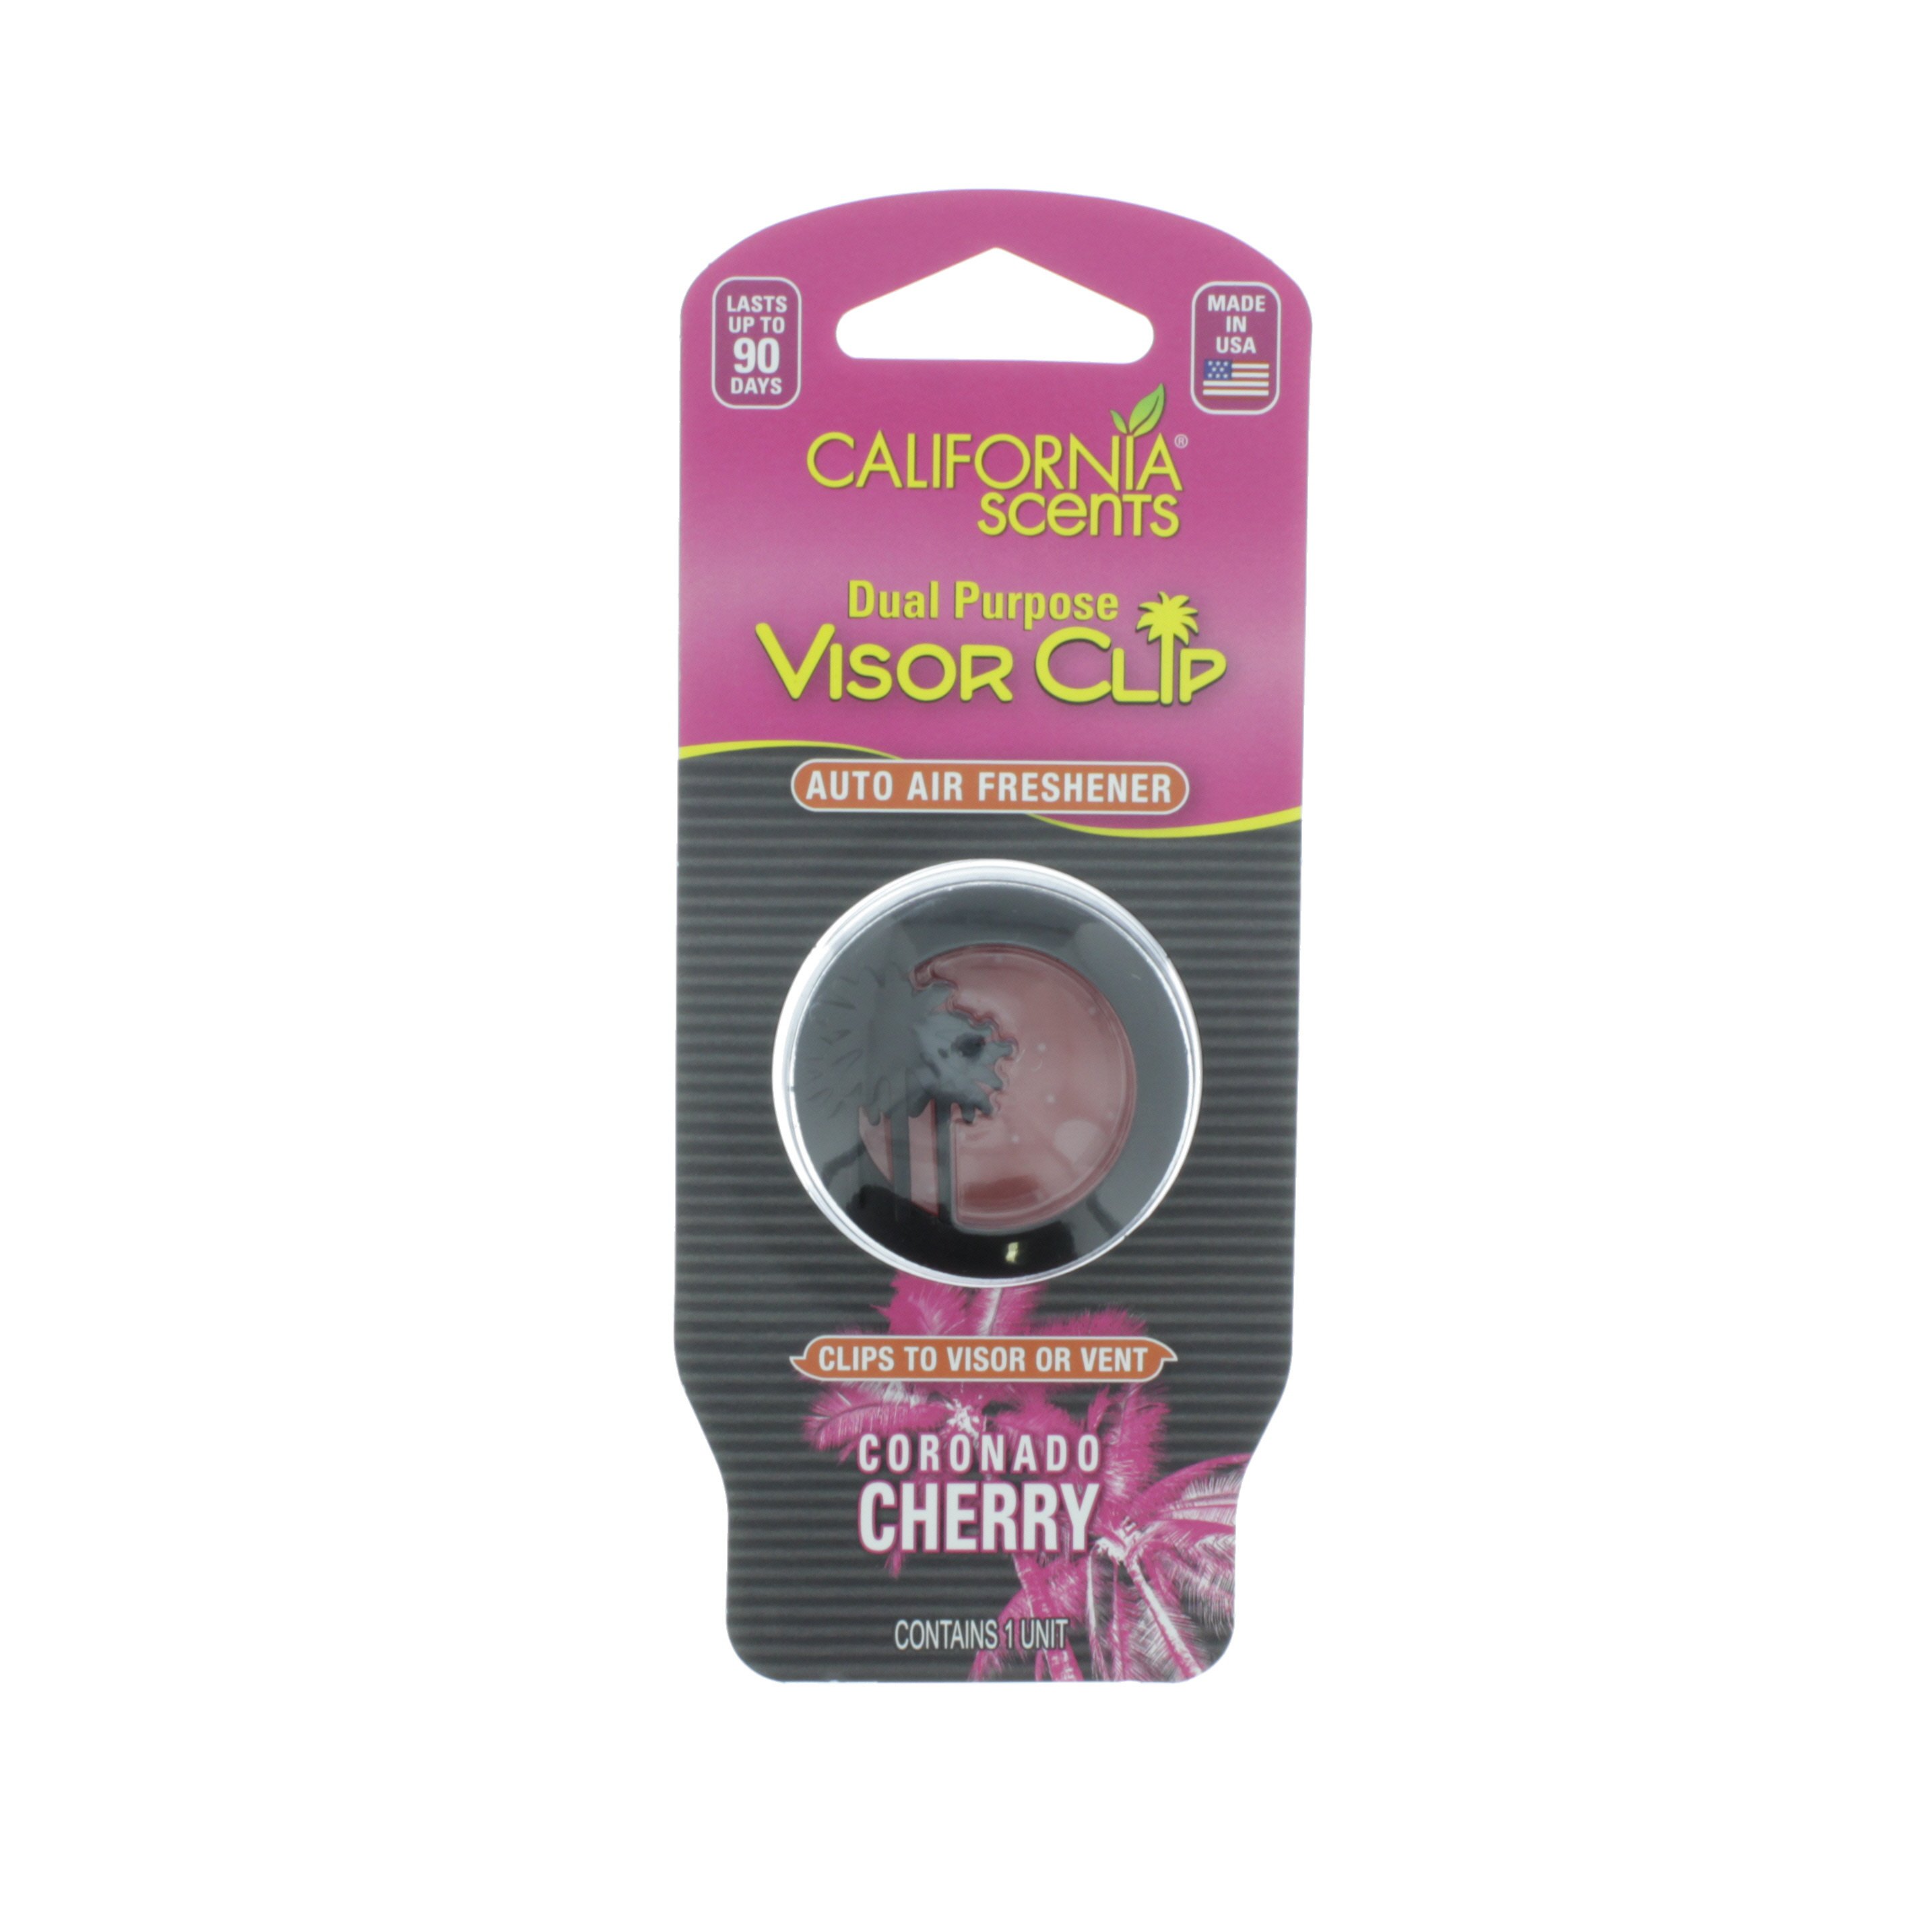 California Scents Visor Clip Auto Air Freshener, Coronado Cherry